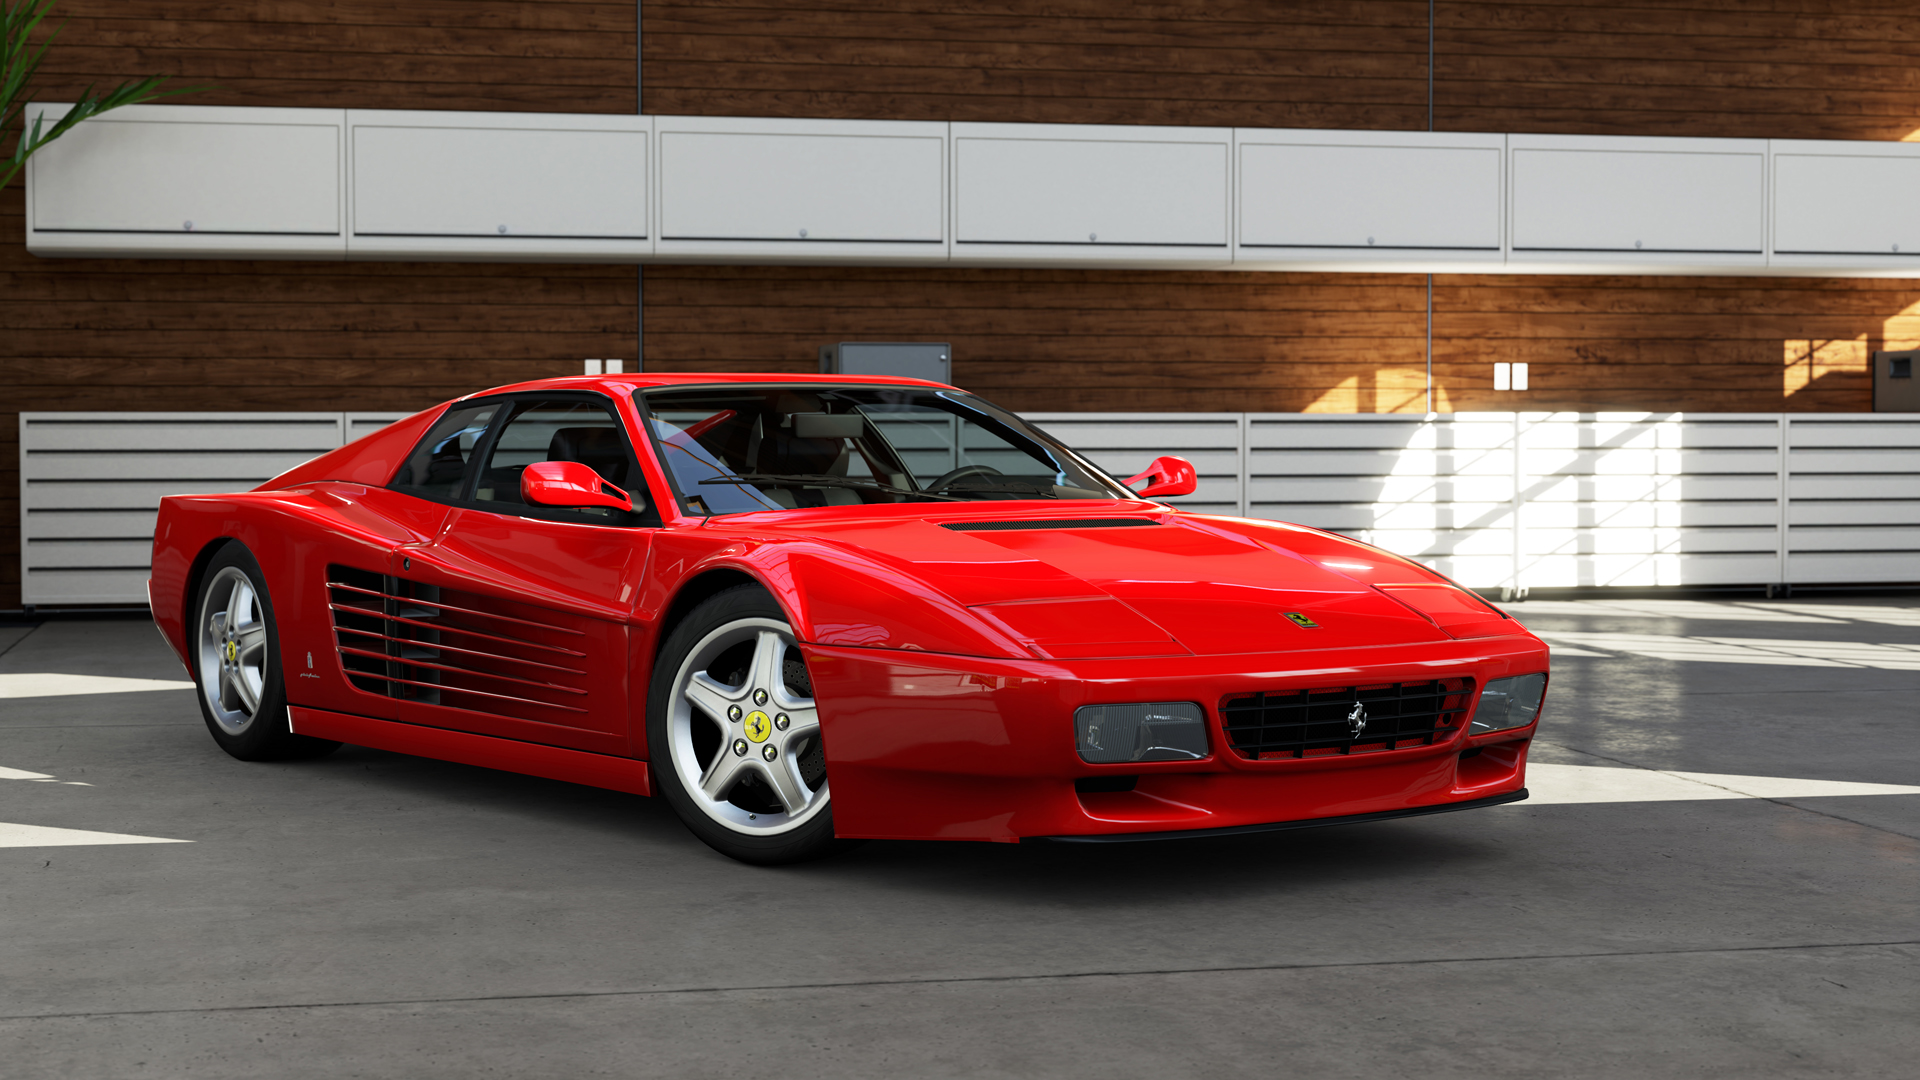 Image - FM5 Ferrari 512 TR.jpg | Forza Motorsport Wiki | FANDOM powered